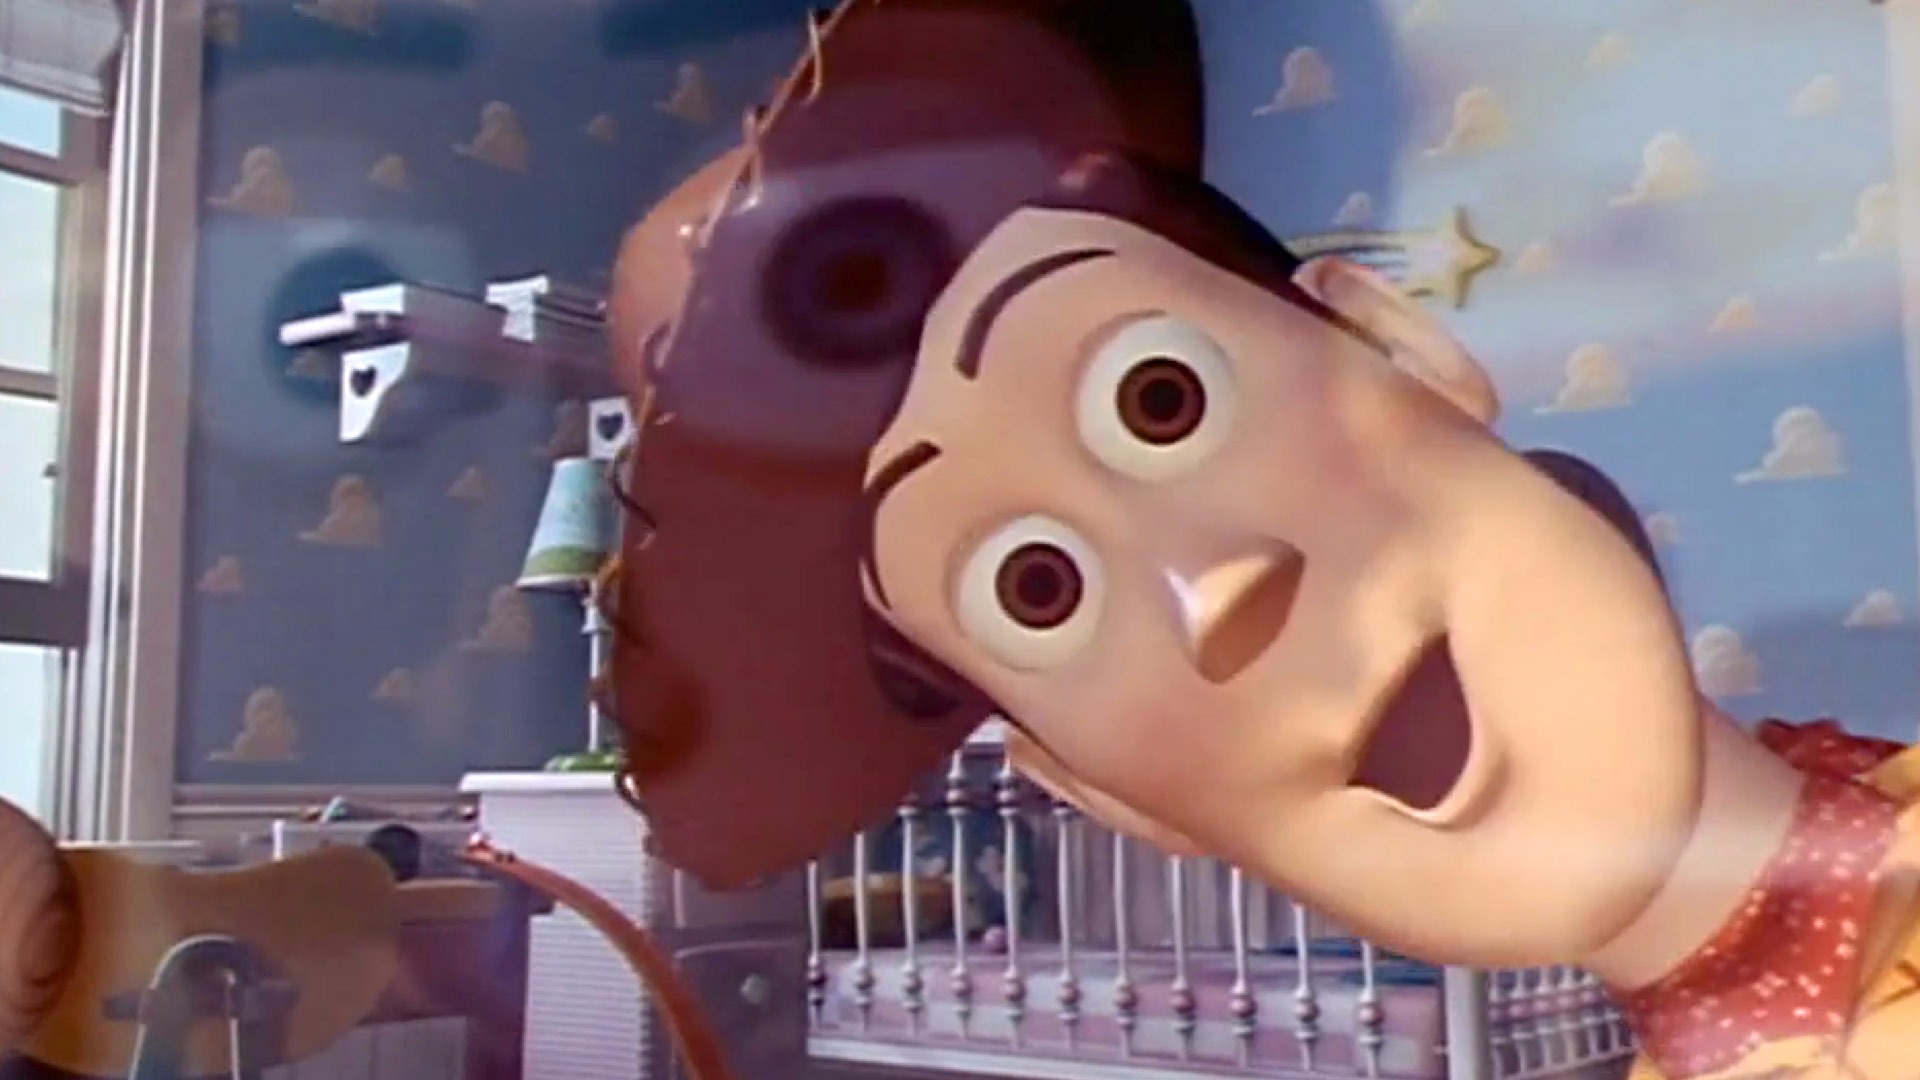 Toy Story 1 (Pixar)